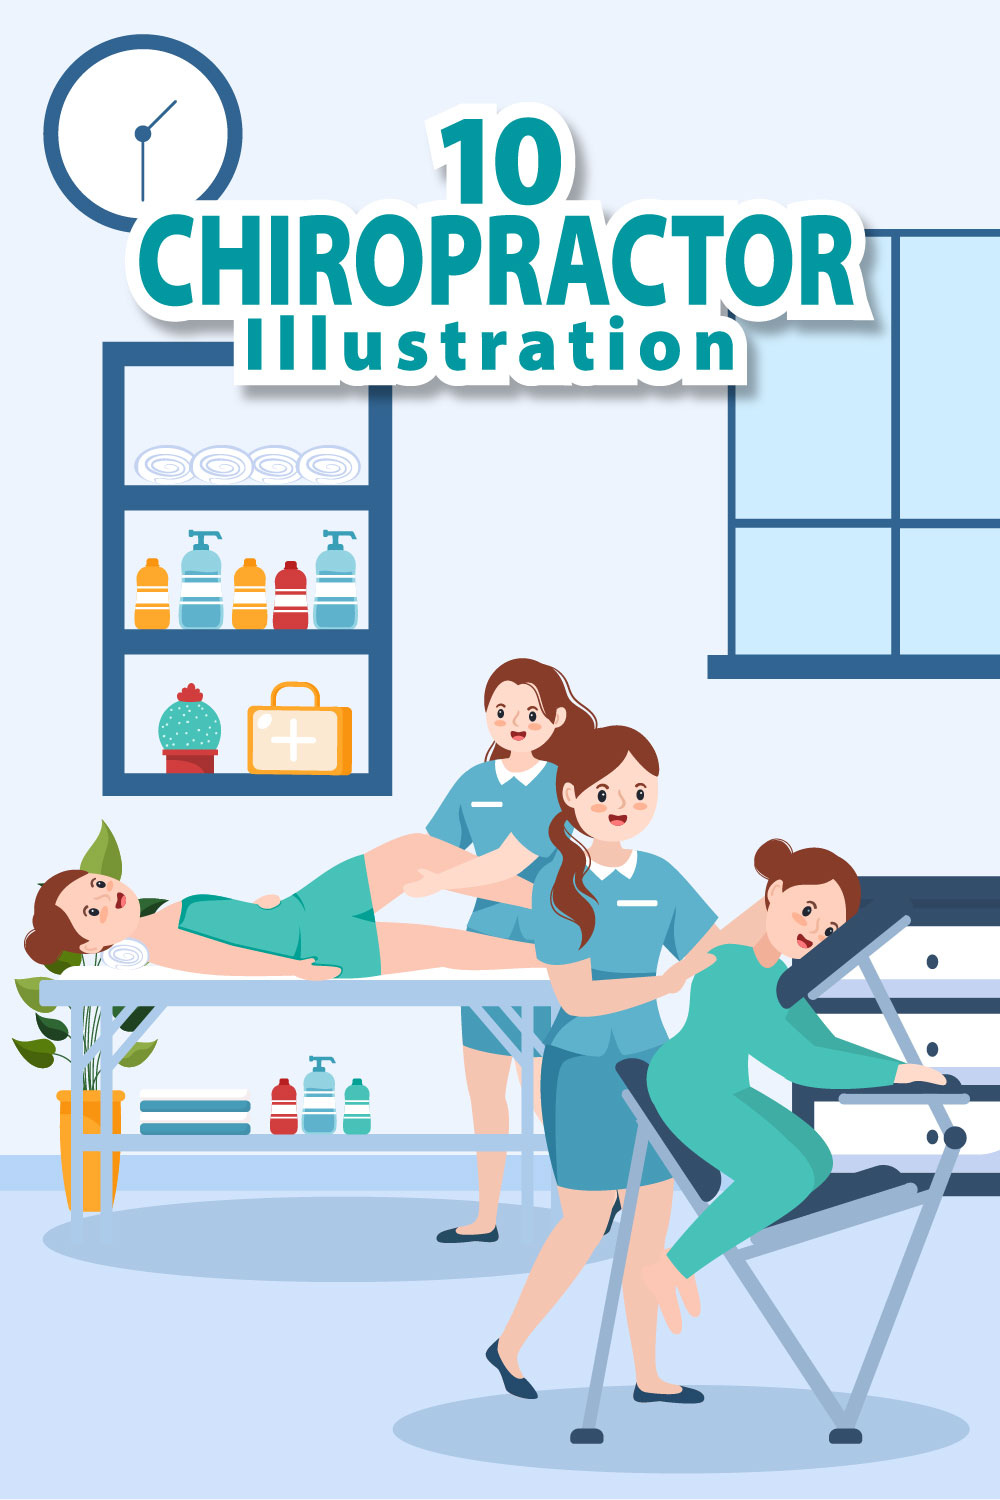 Chiropractor Physiotherapy Rehabilitation Illustration pinterest image.